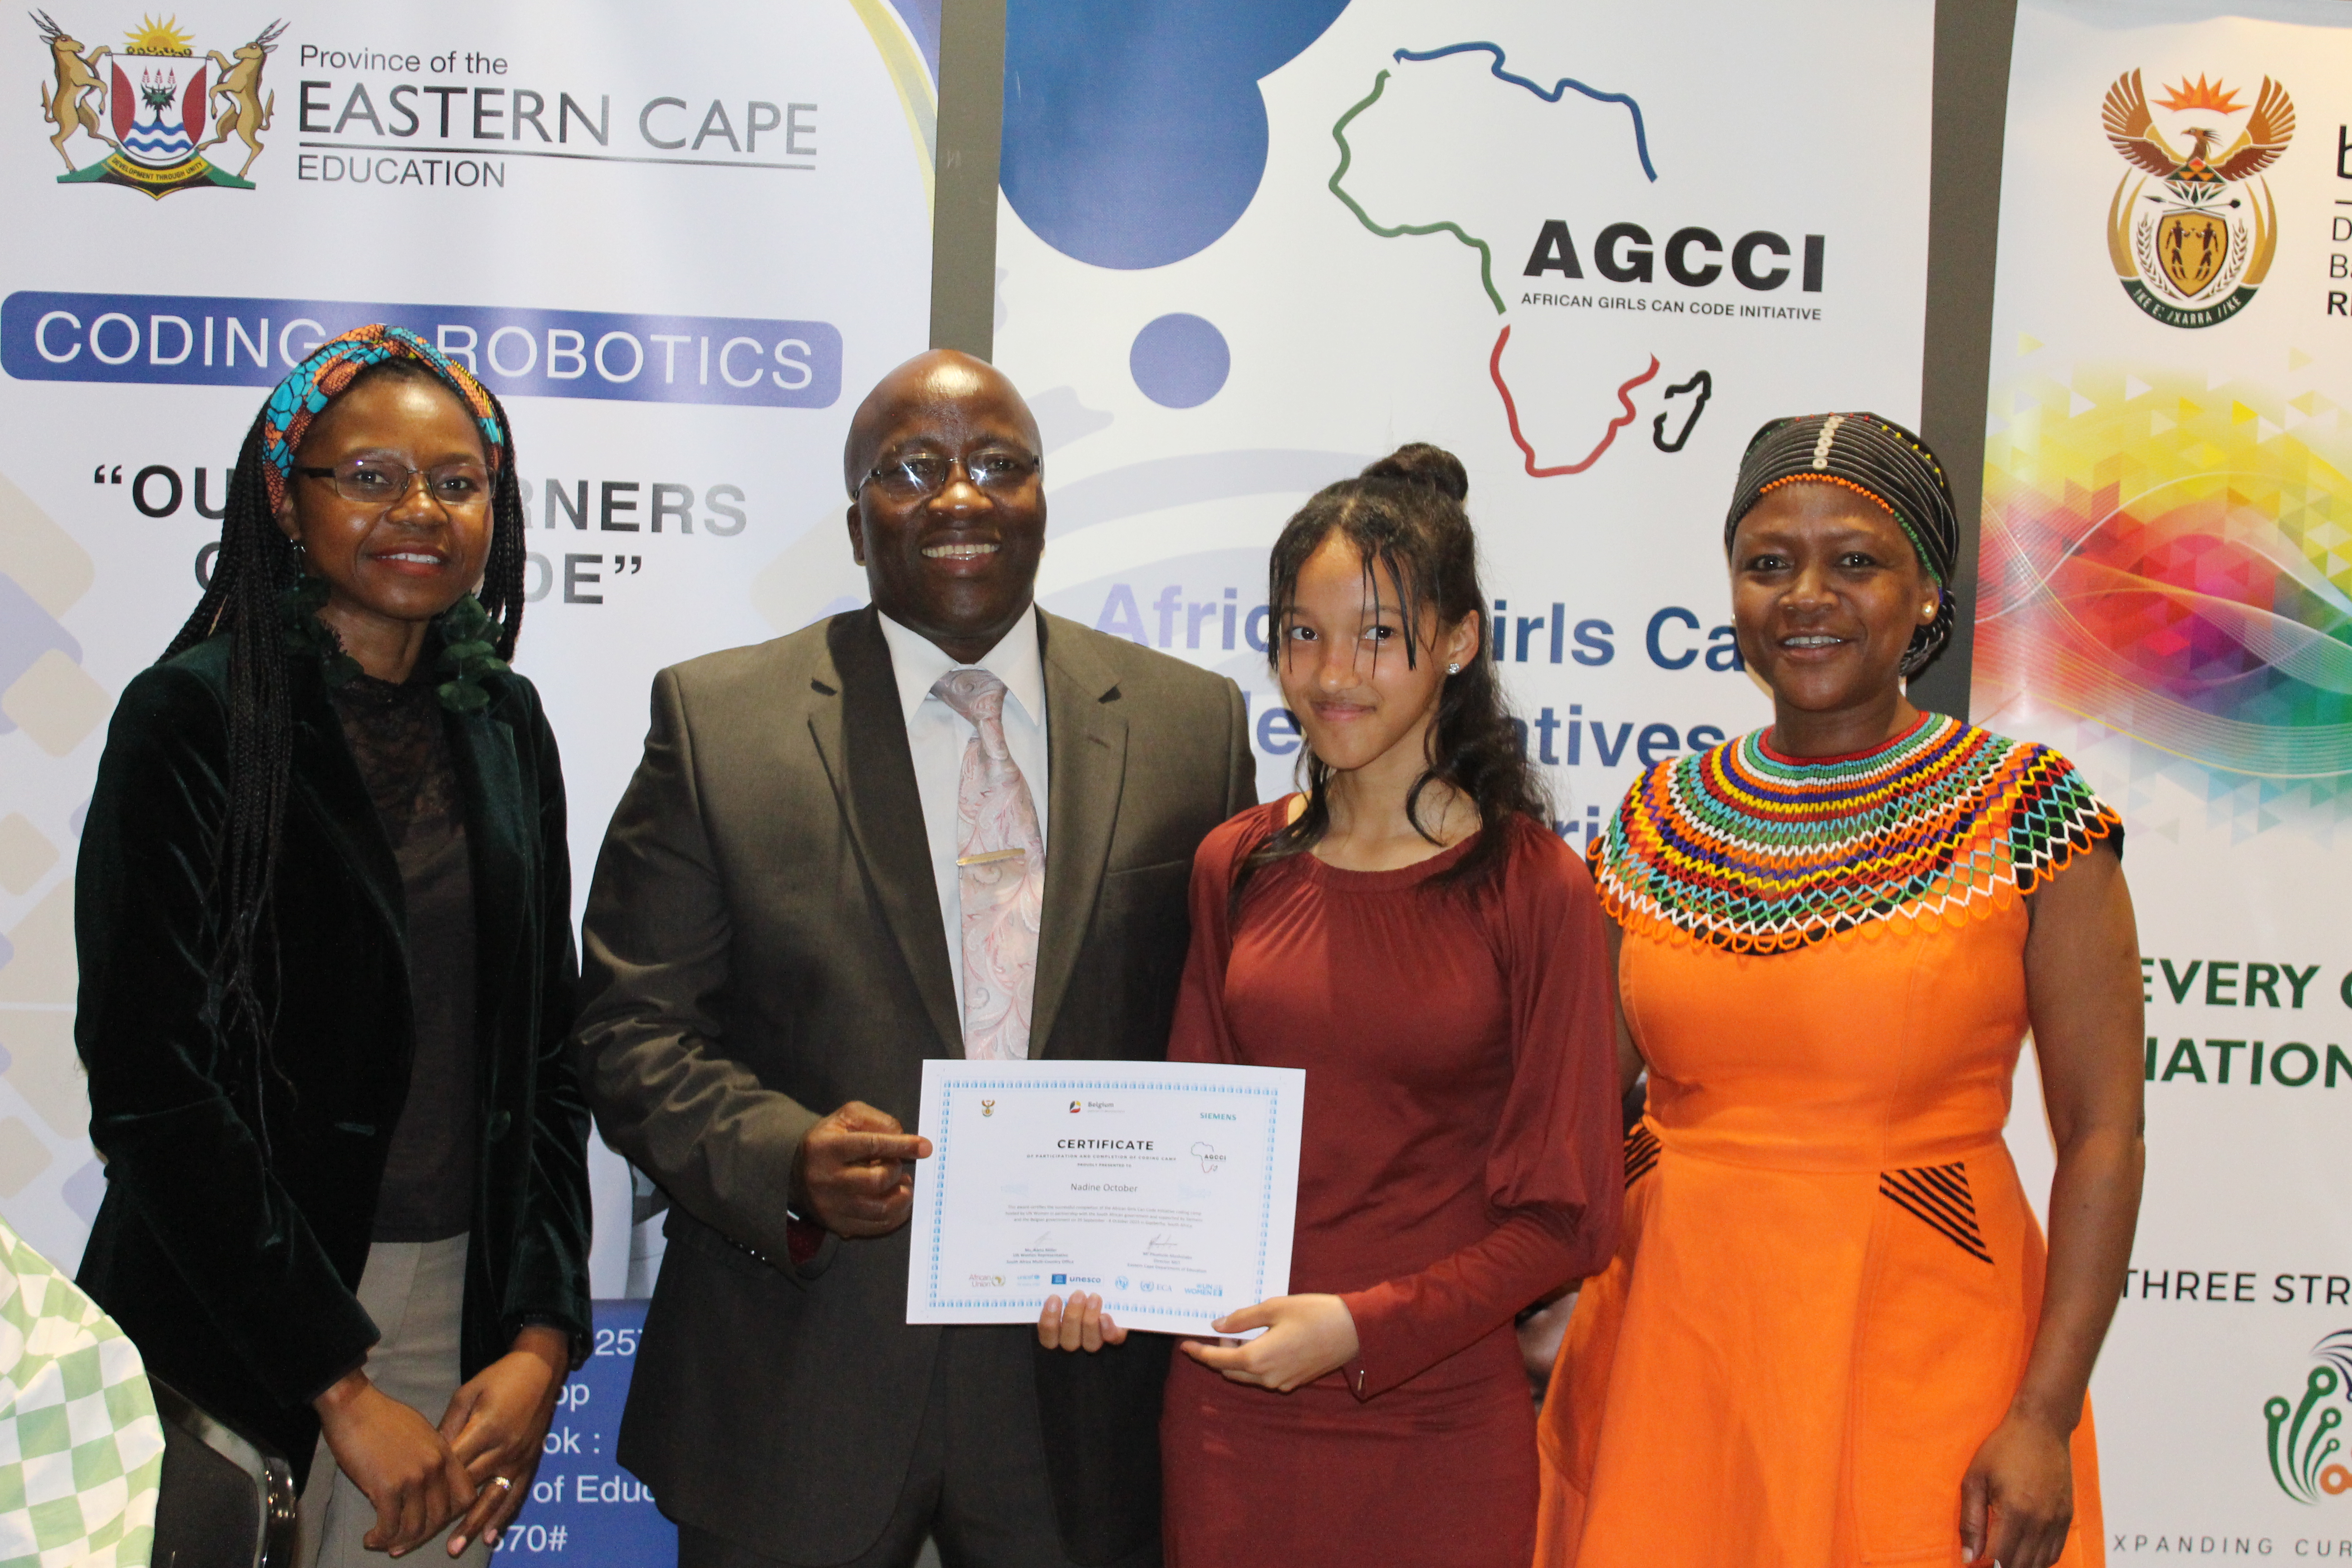 African Girls Can Code Initiative in South Africa